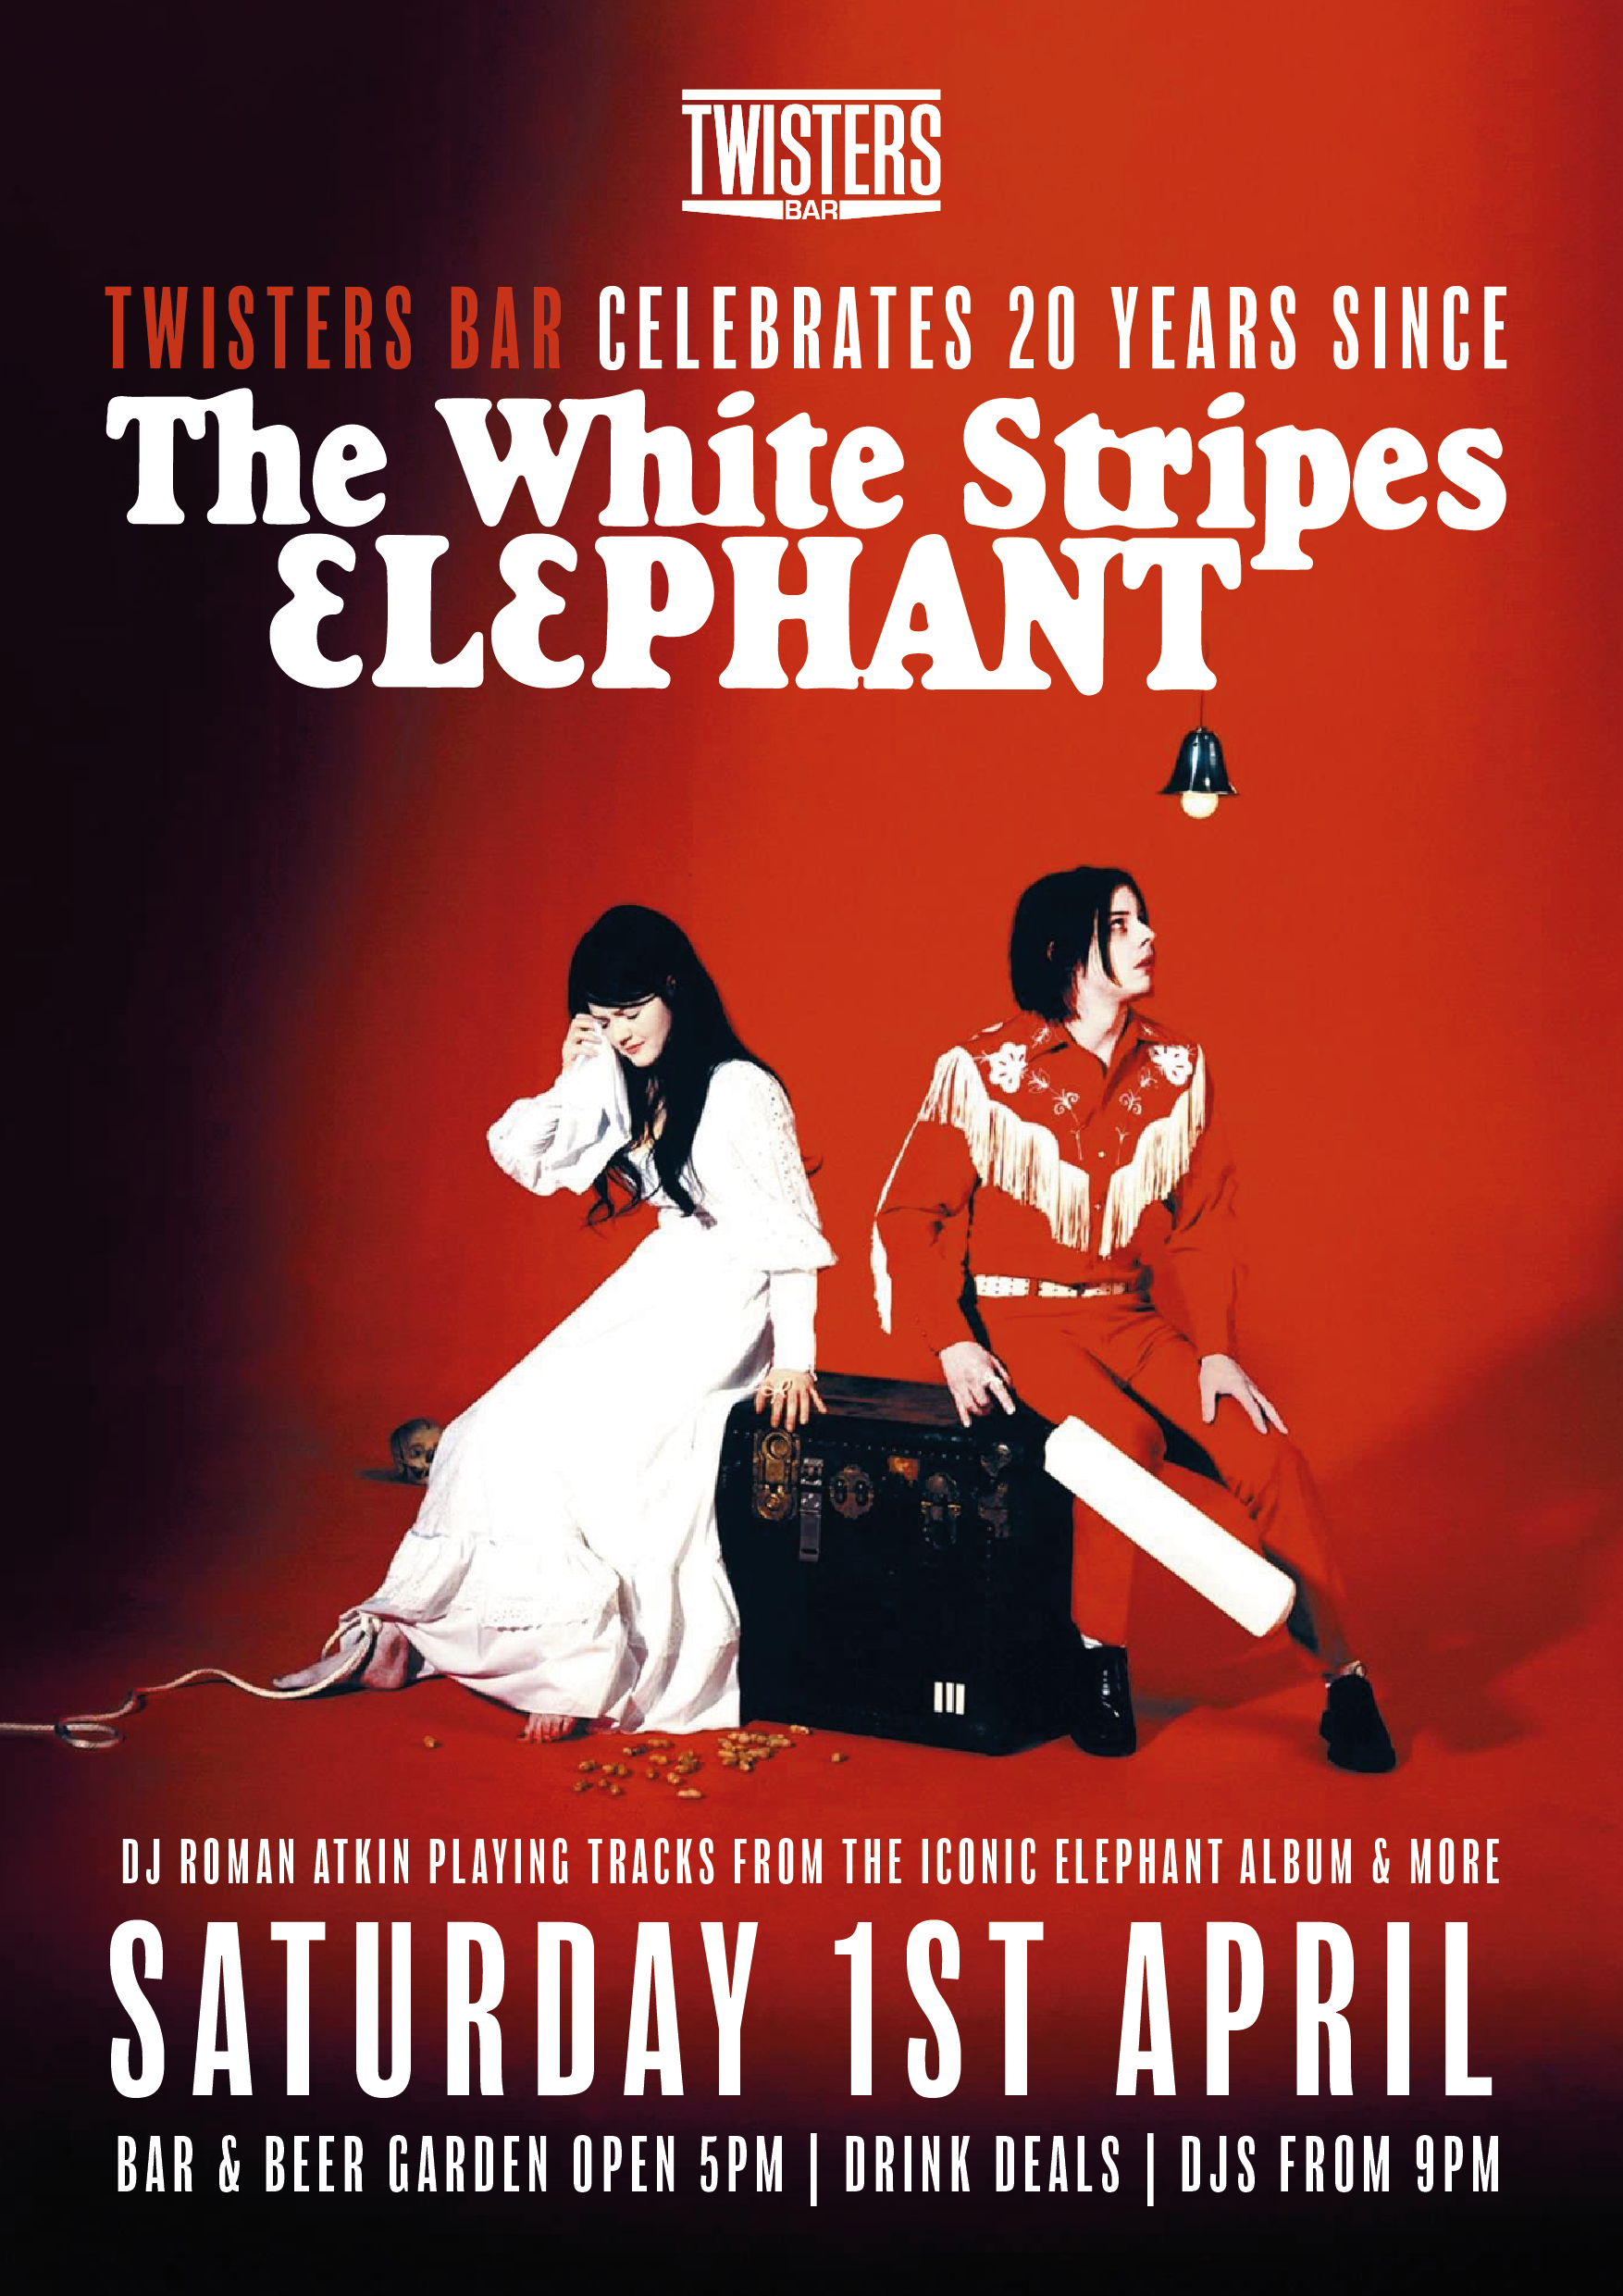 Twisters celebrates 20 years since The White Stripes Elephant